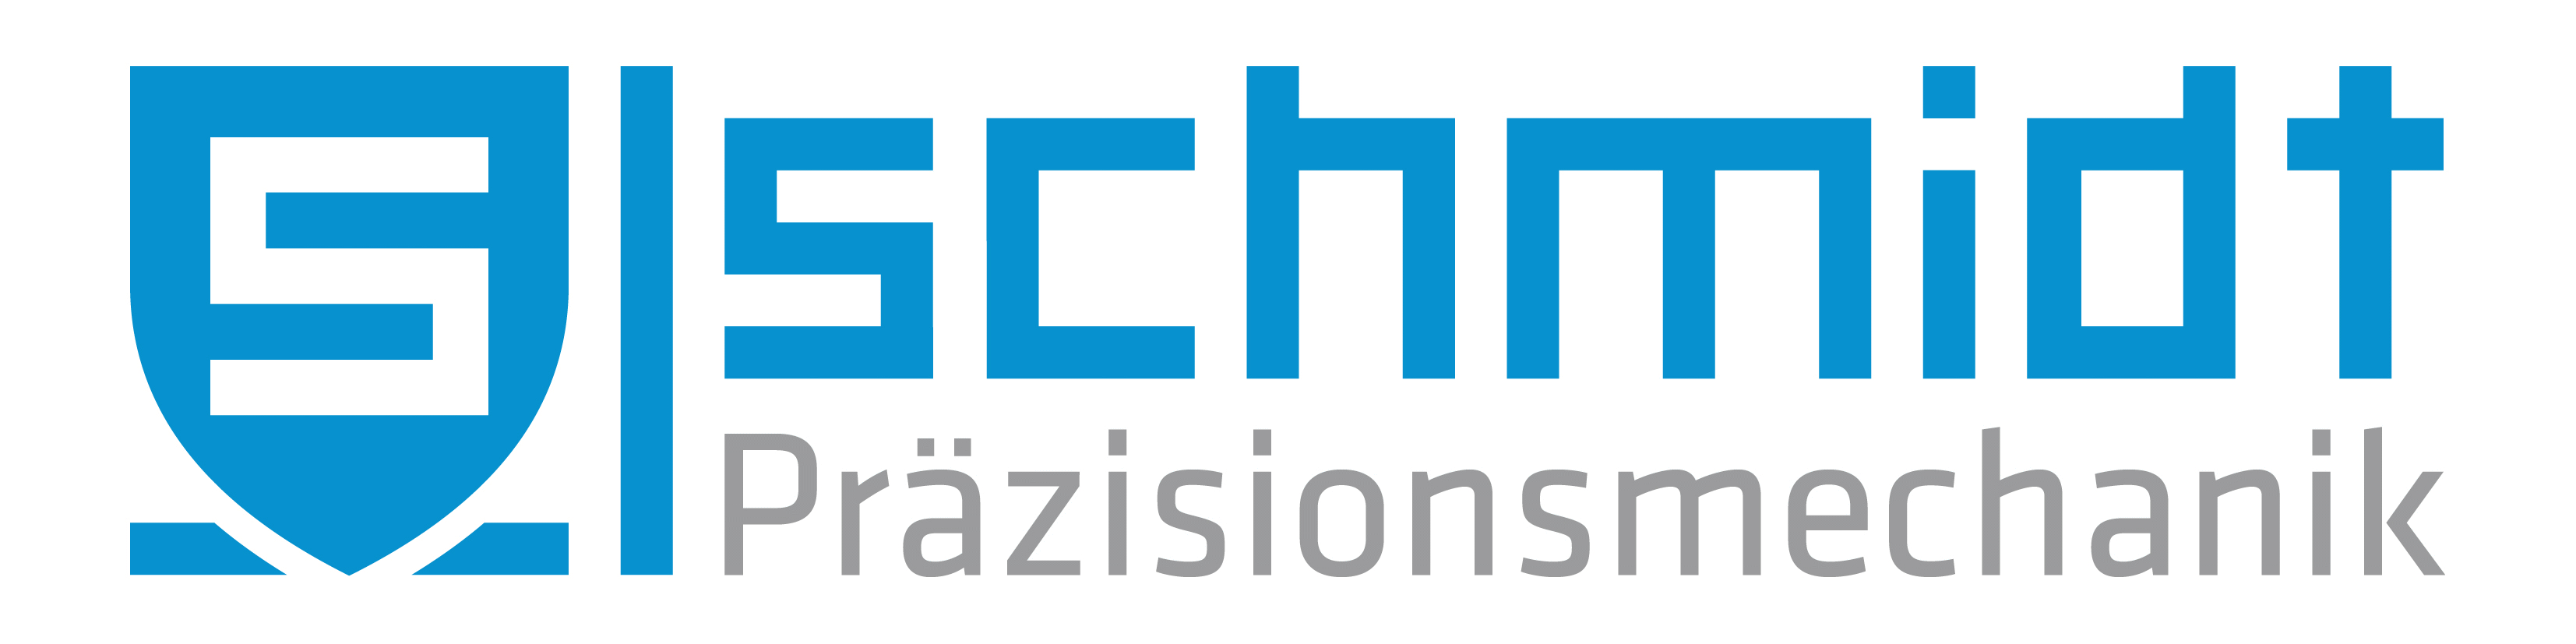 Schmidt Präzisionsmechanik GmbH